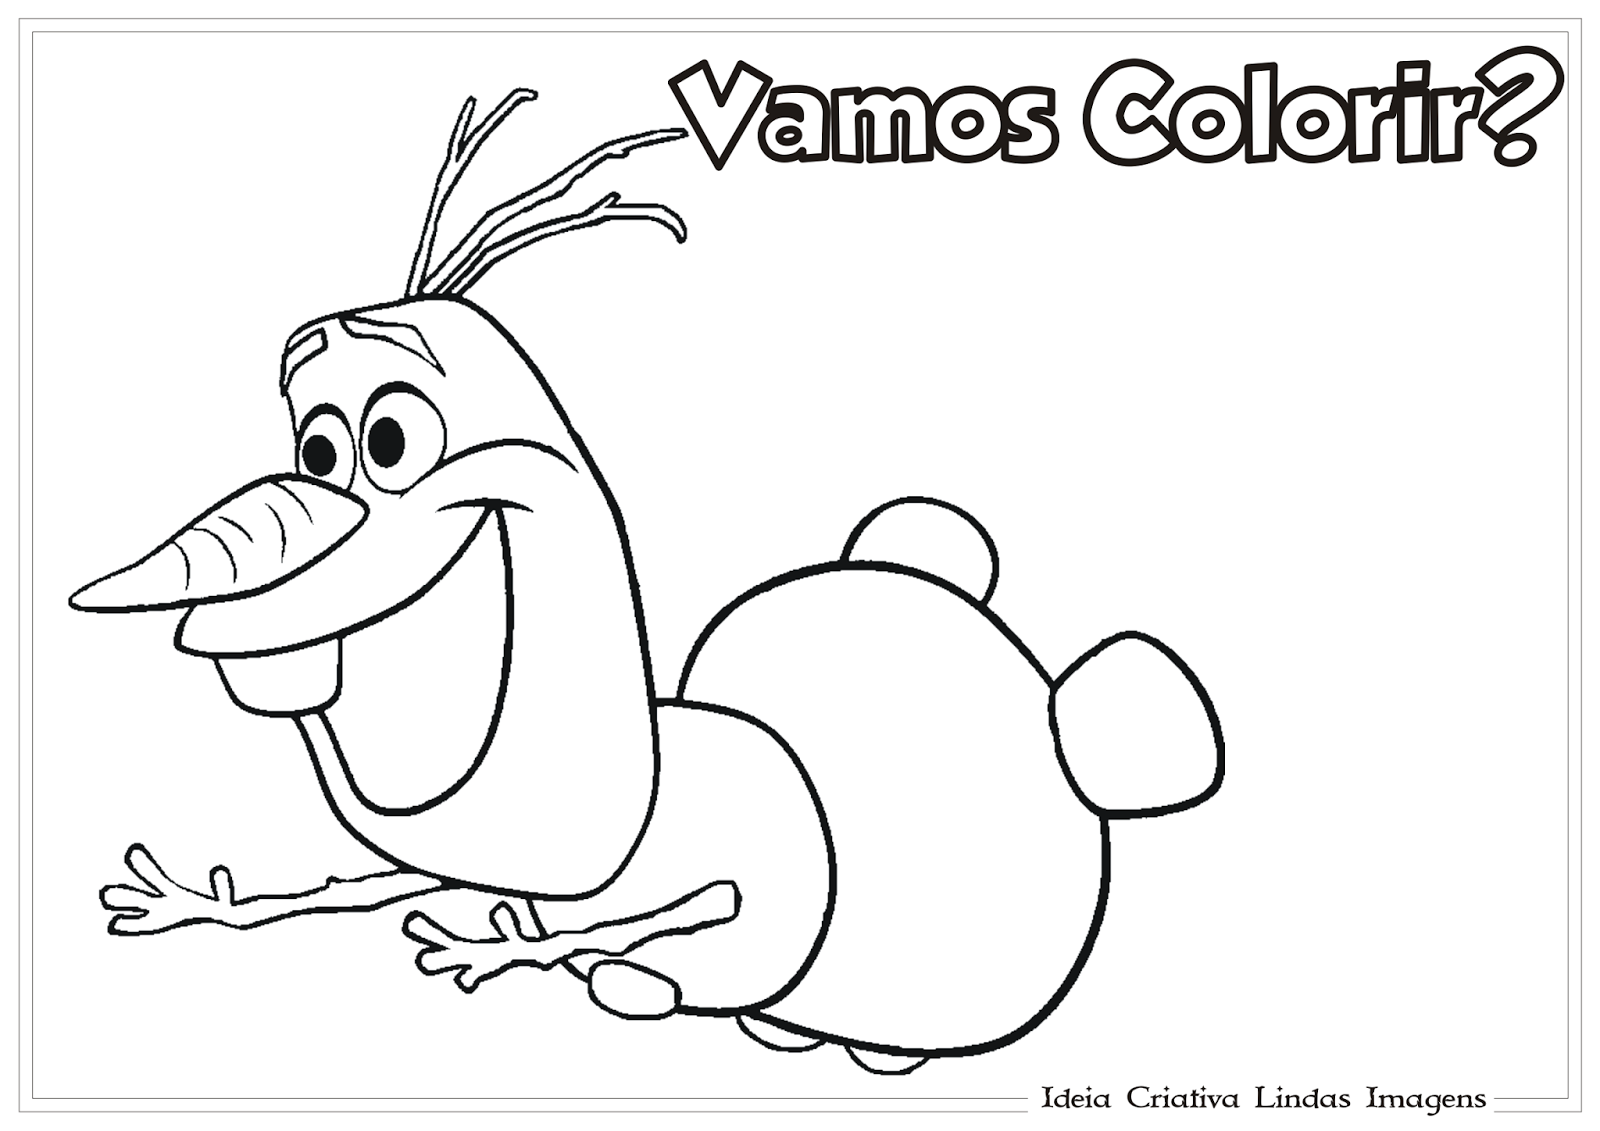 Olaf - Frozen desenho pra colorir